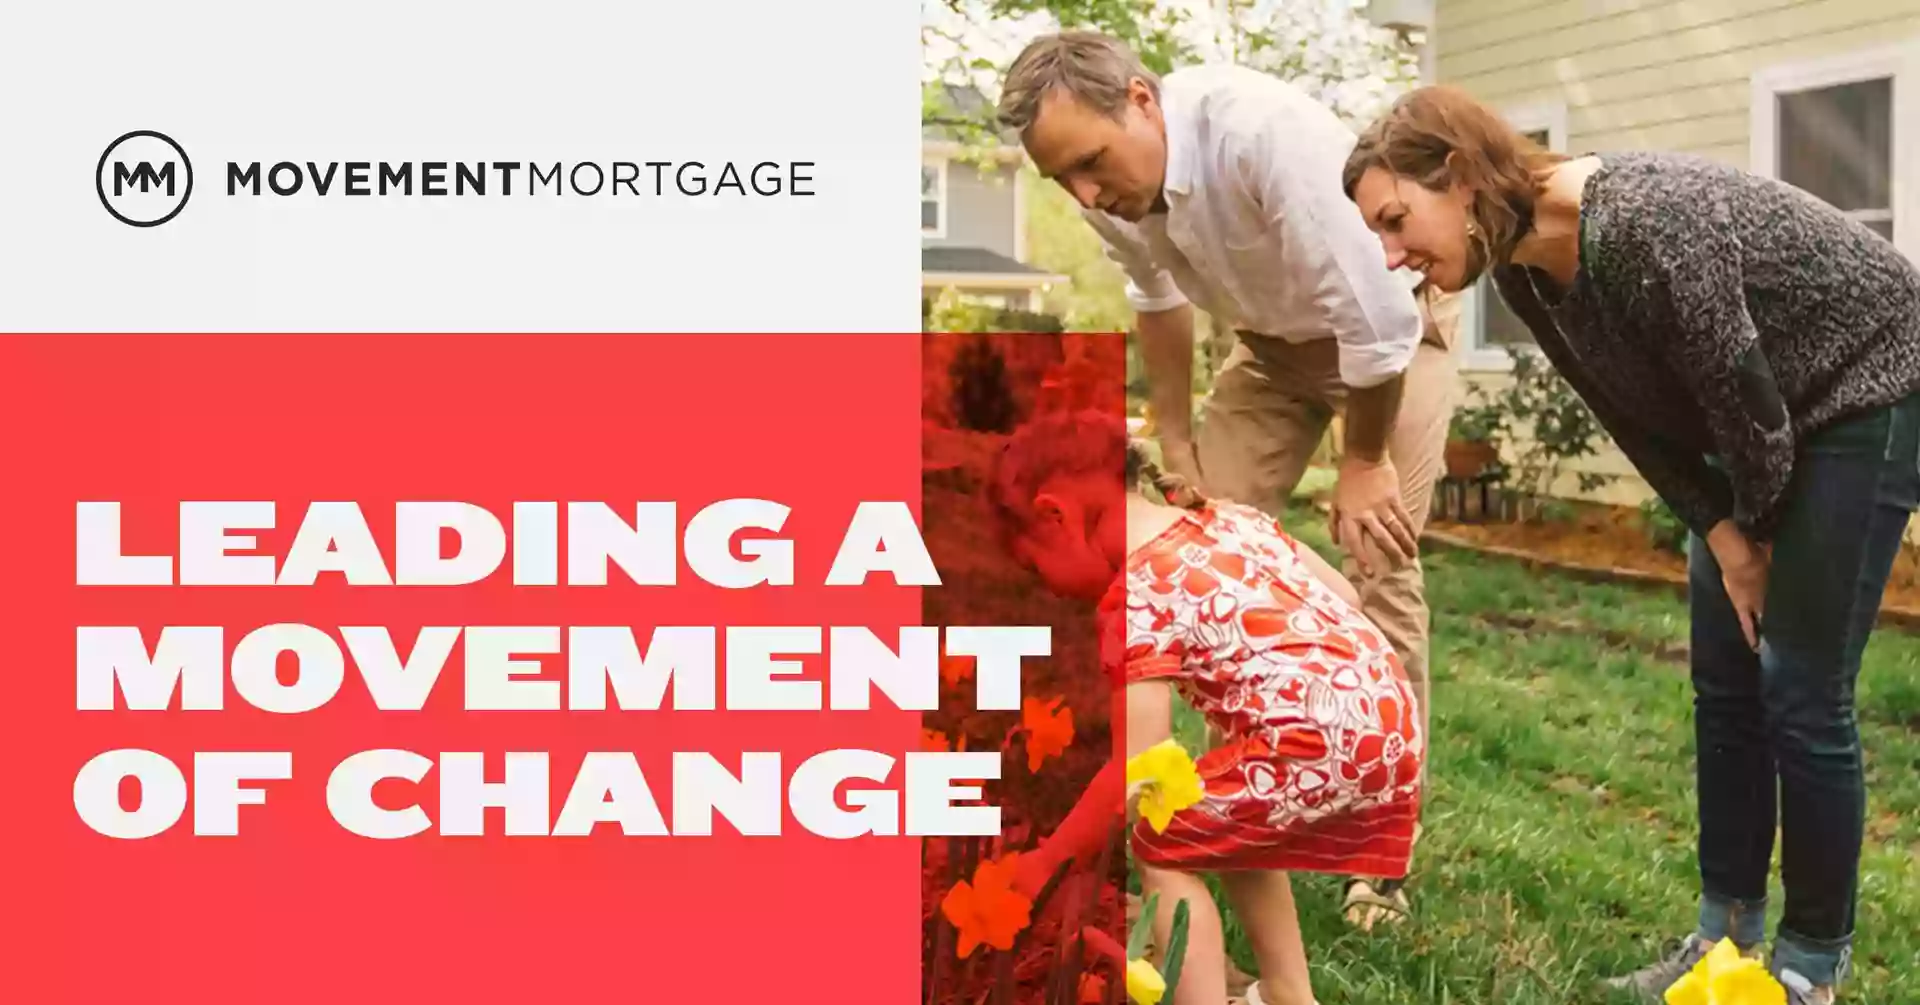 Movement Mortgage LLC